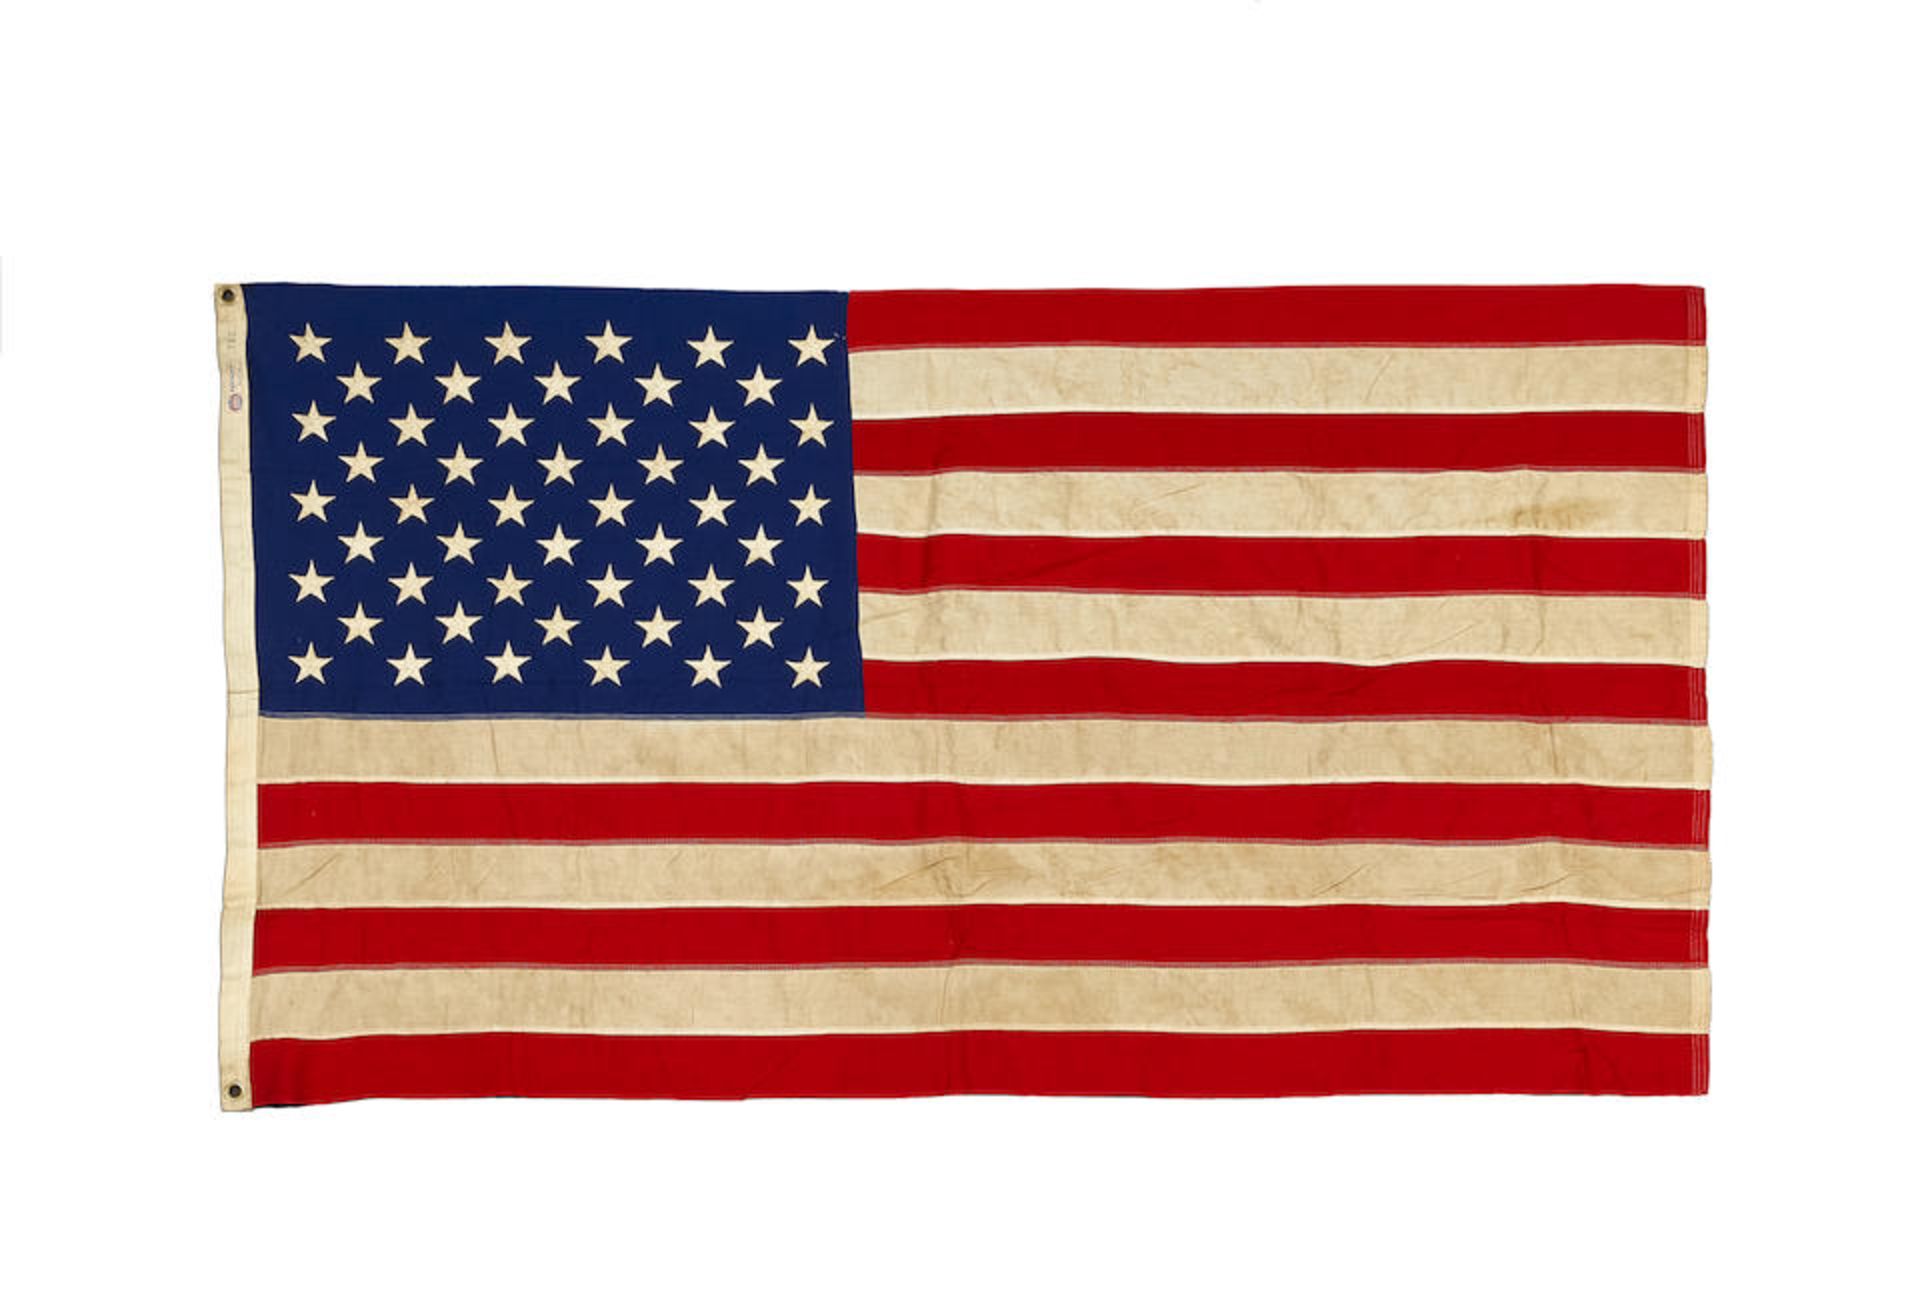 50 STAR AMERICAN FLAG. [USA: Annin Defiance brand, 1960s.]